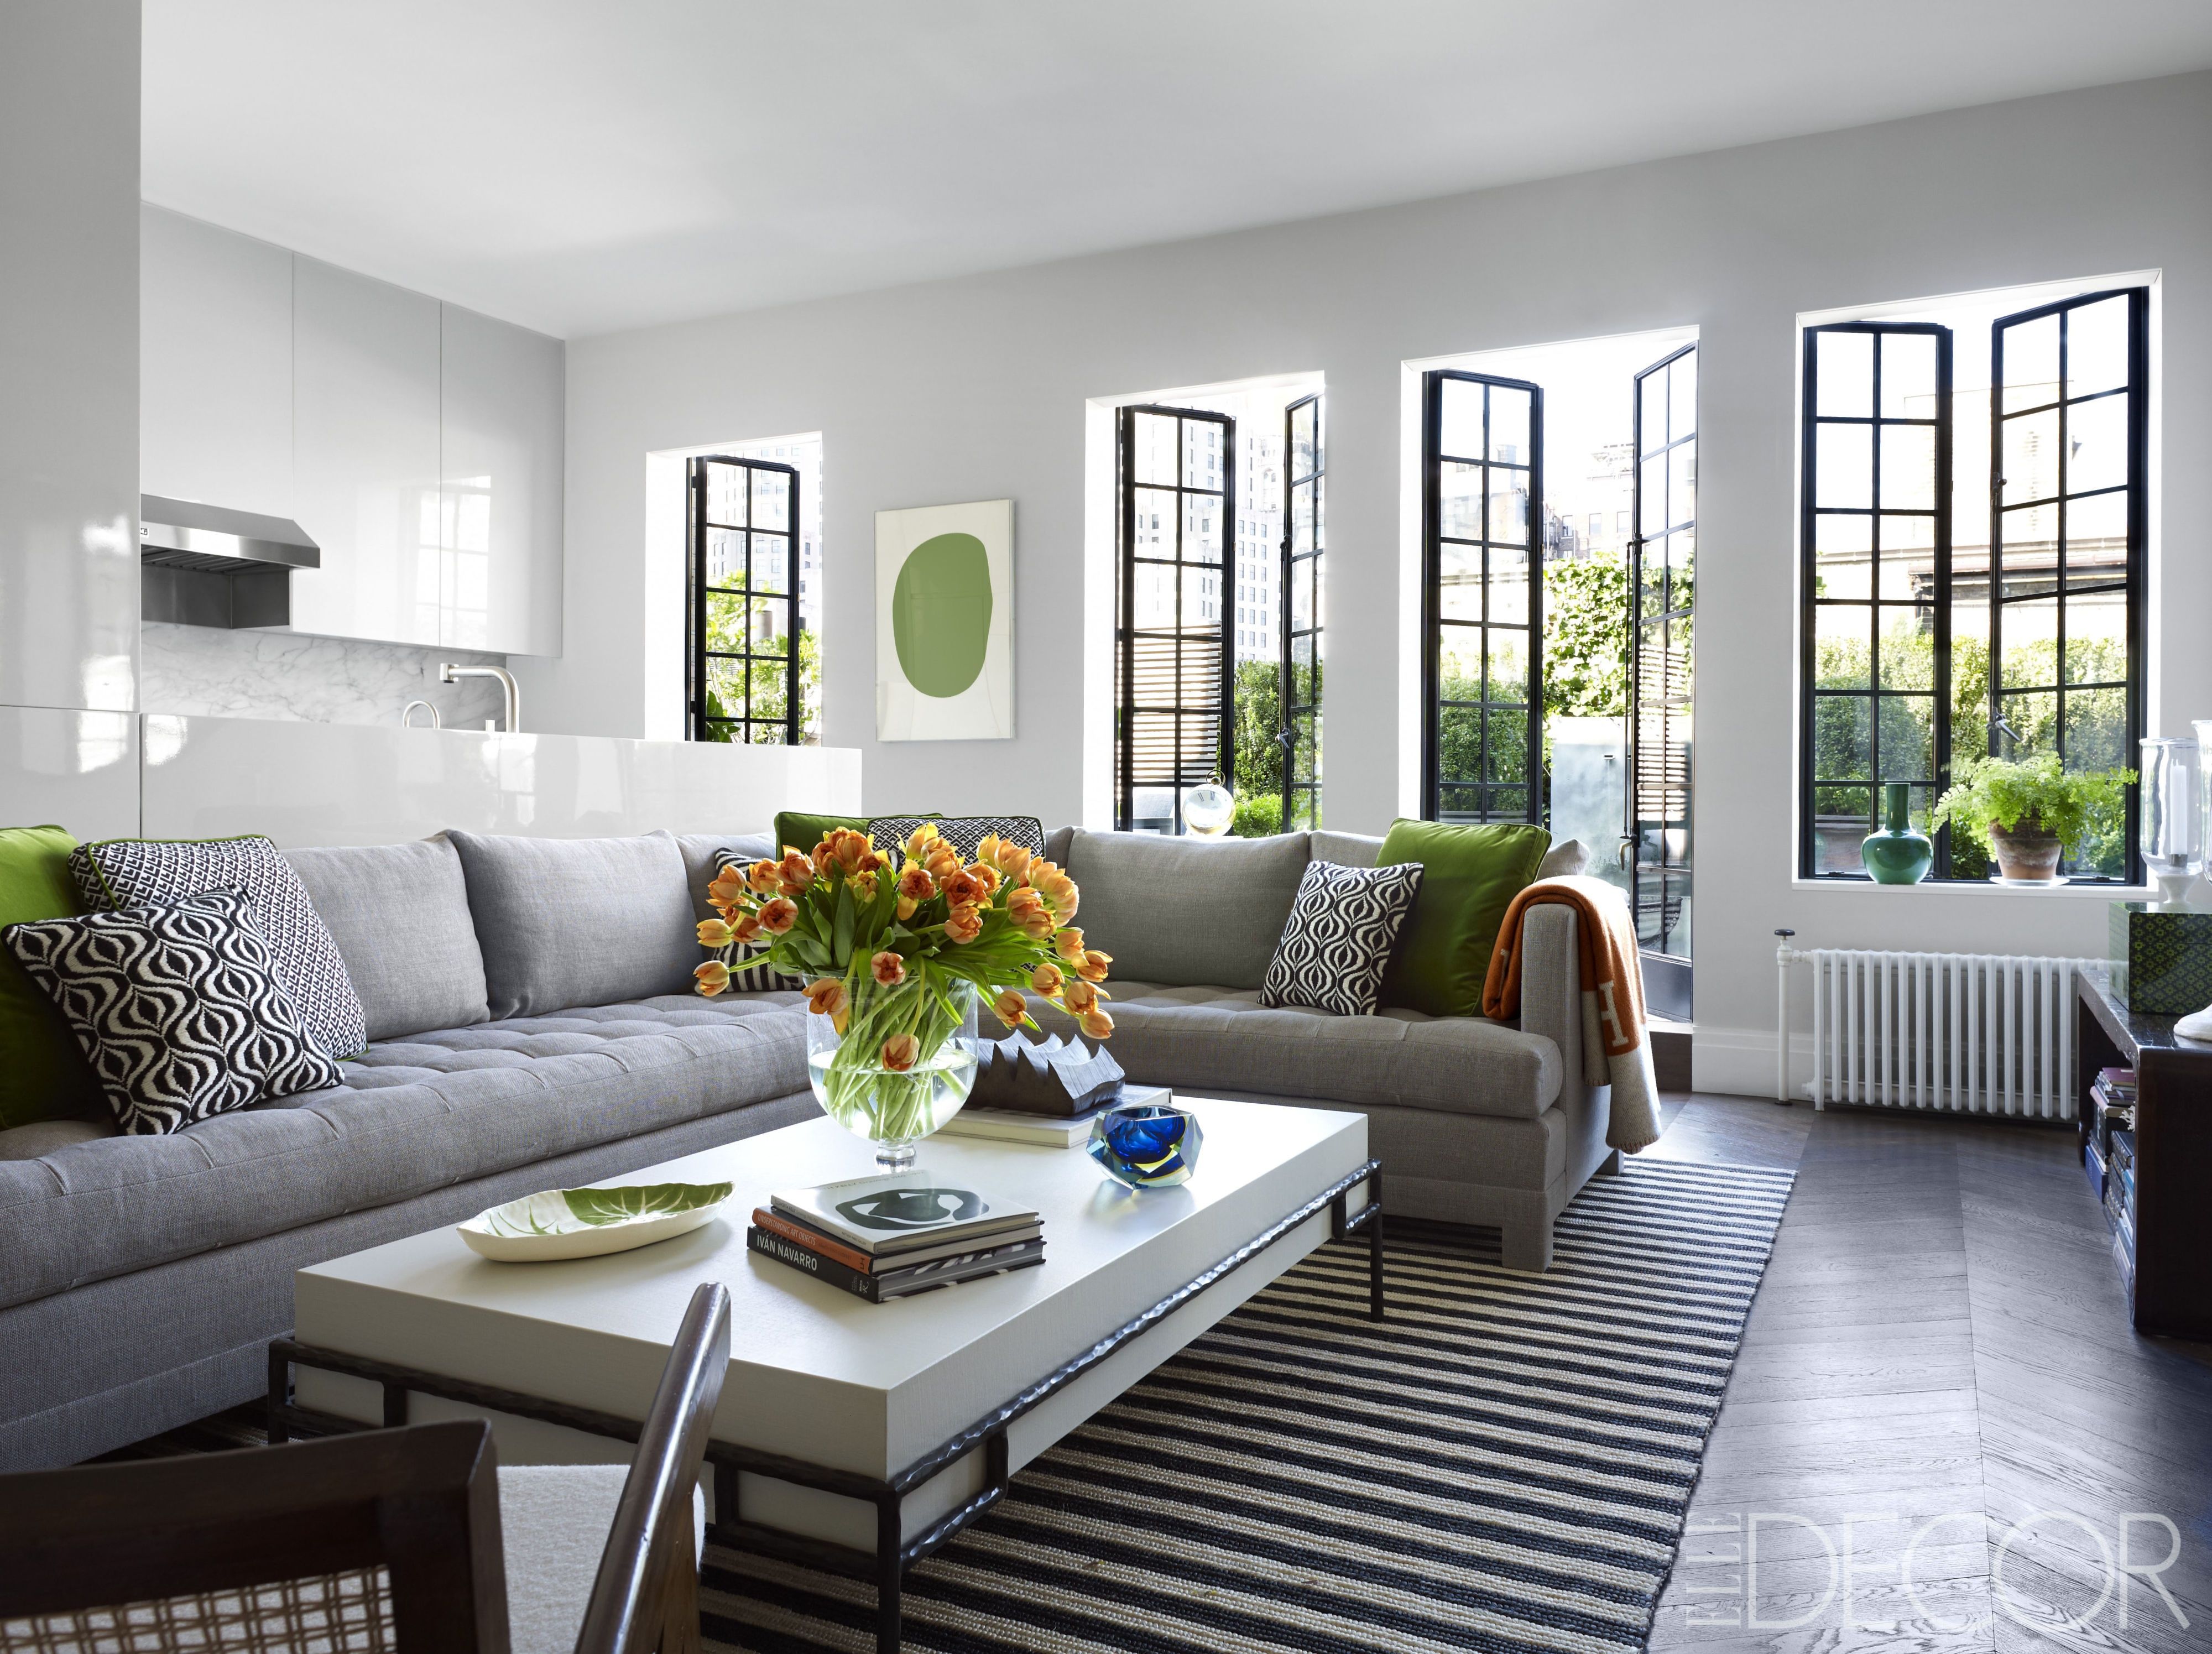 Living Room Ideas Grey Walls - Home Design Ideas